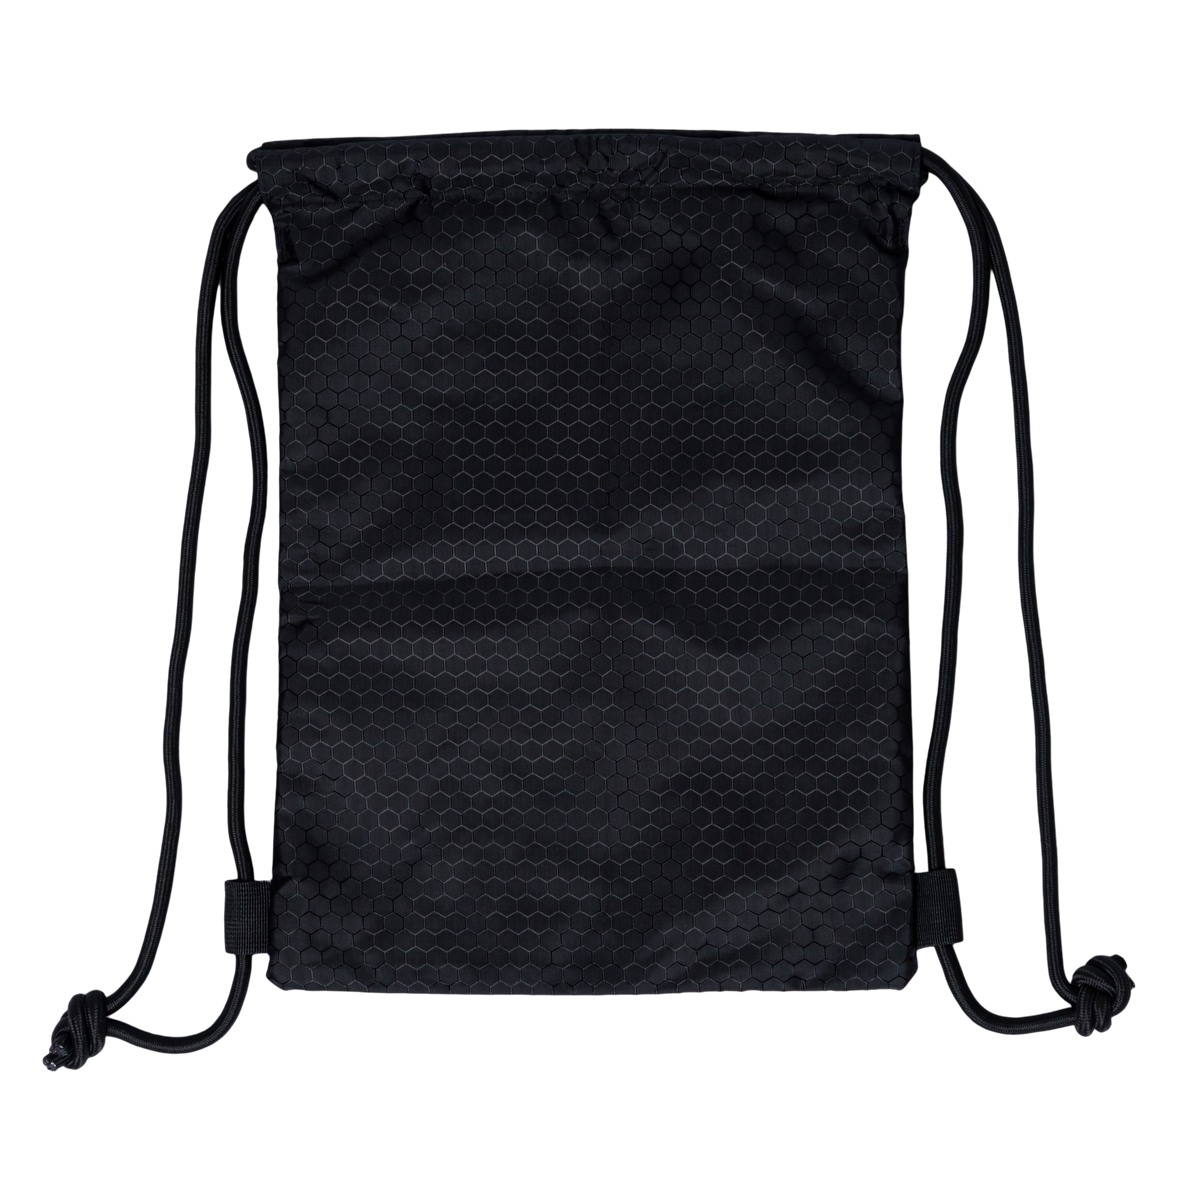 Undersun Premium Nylon Carry Bag -  - Undersun Fitness 